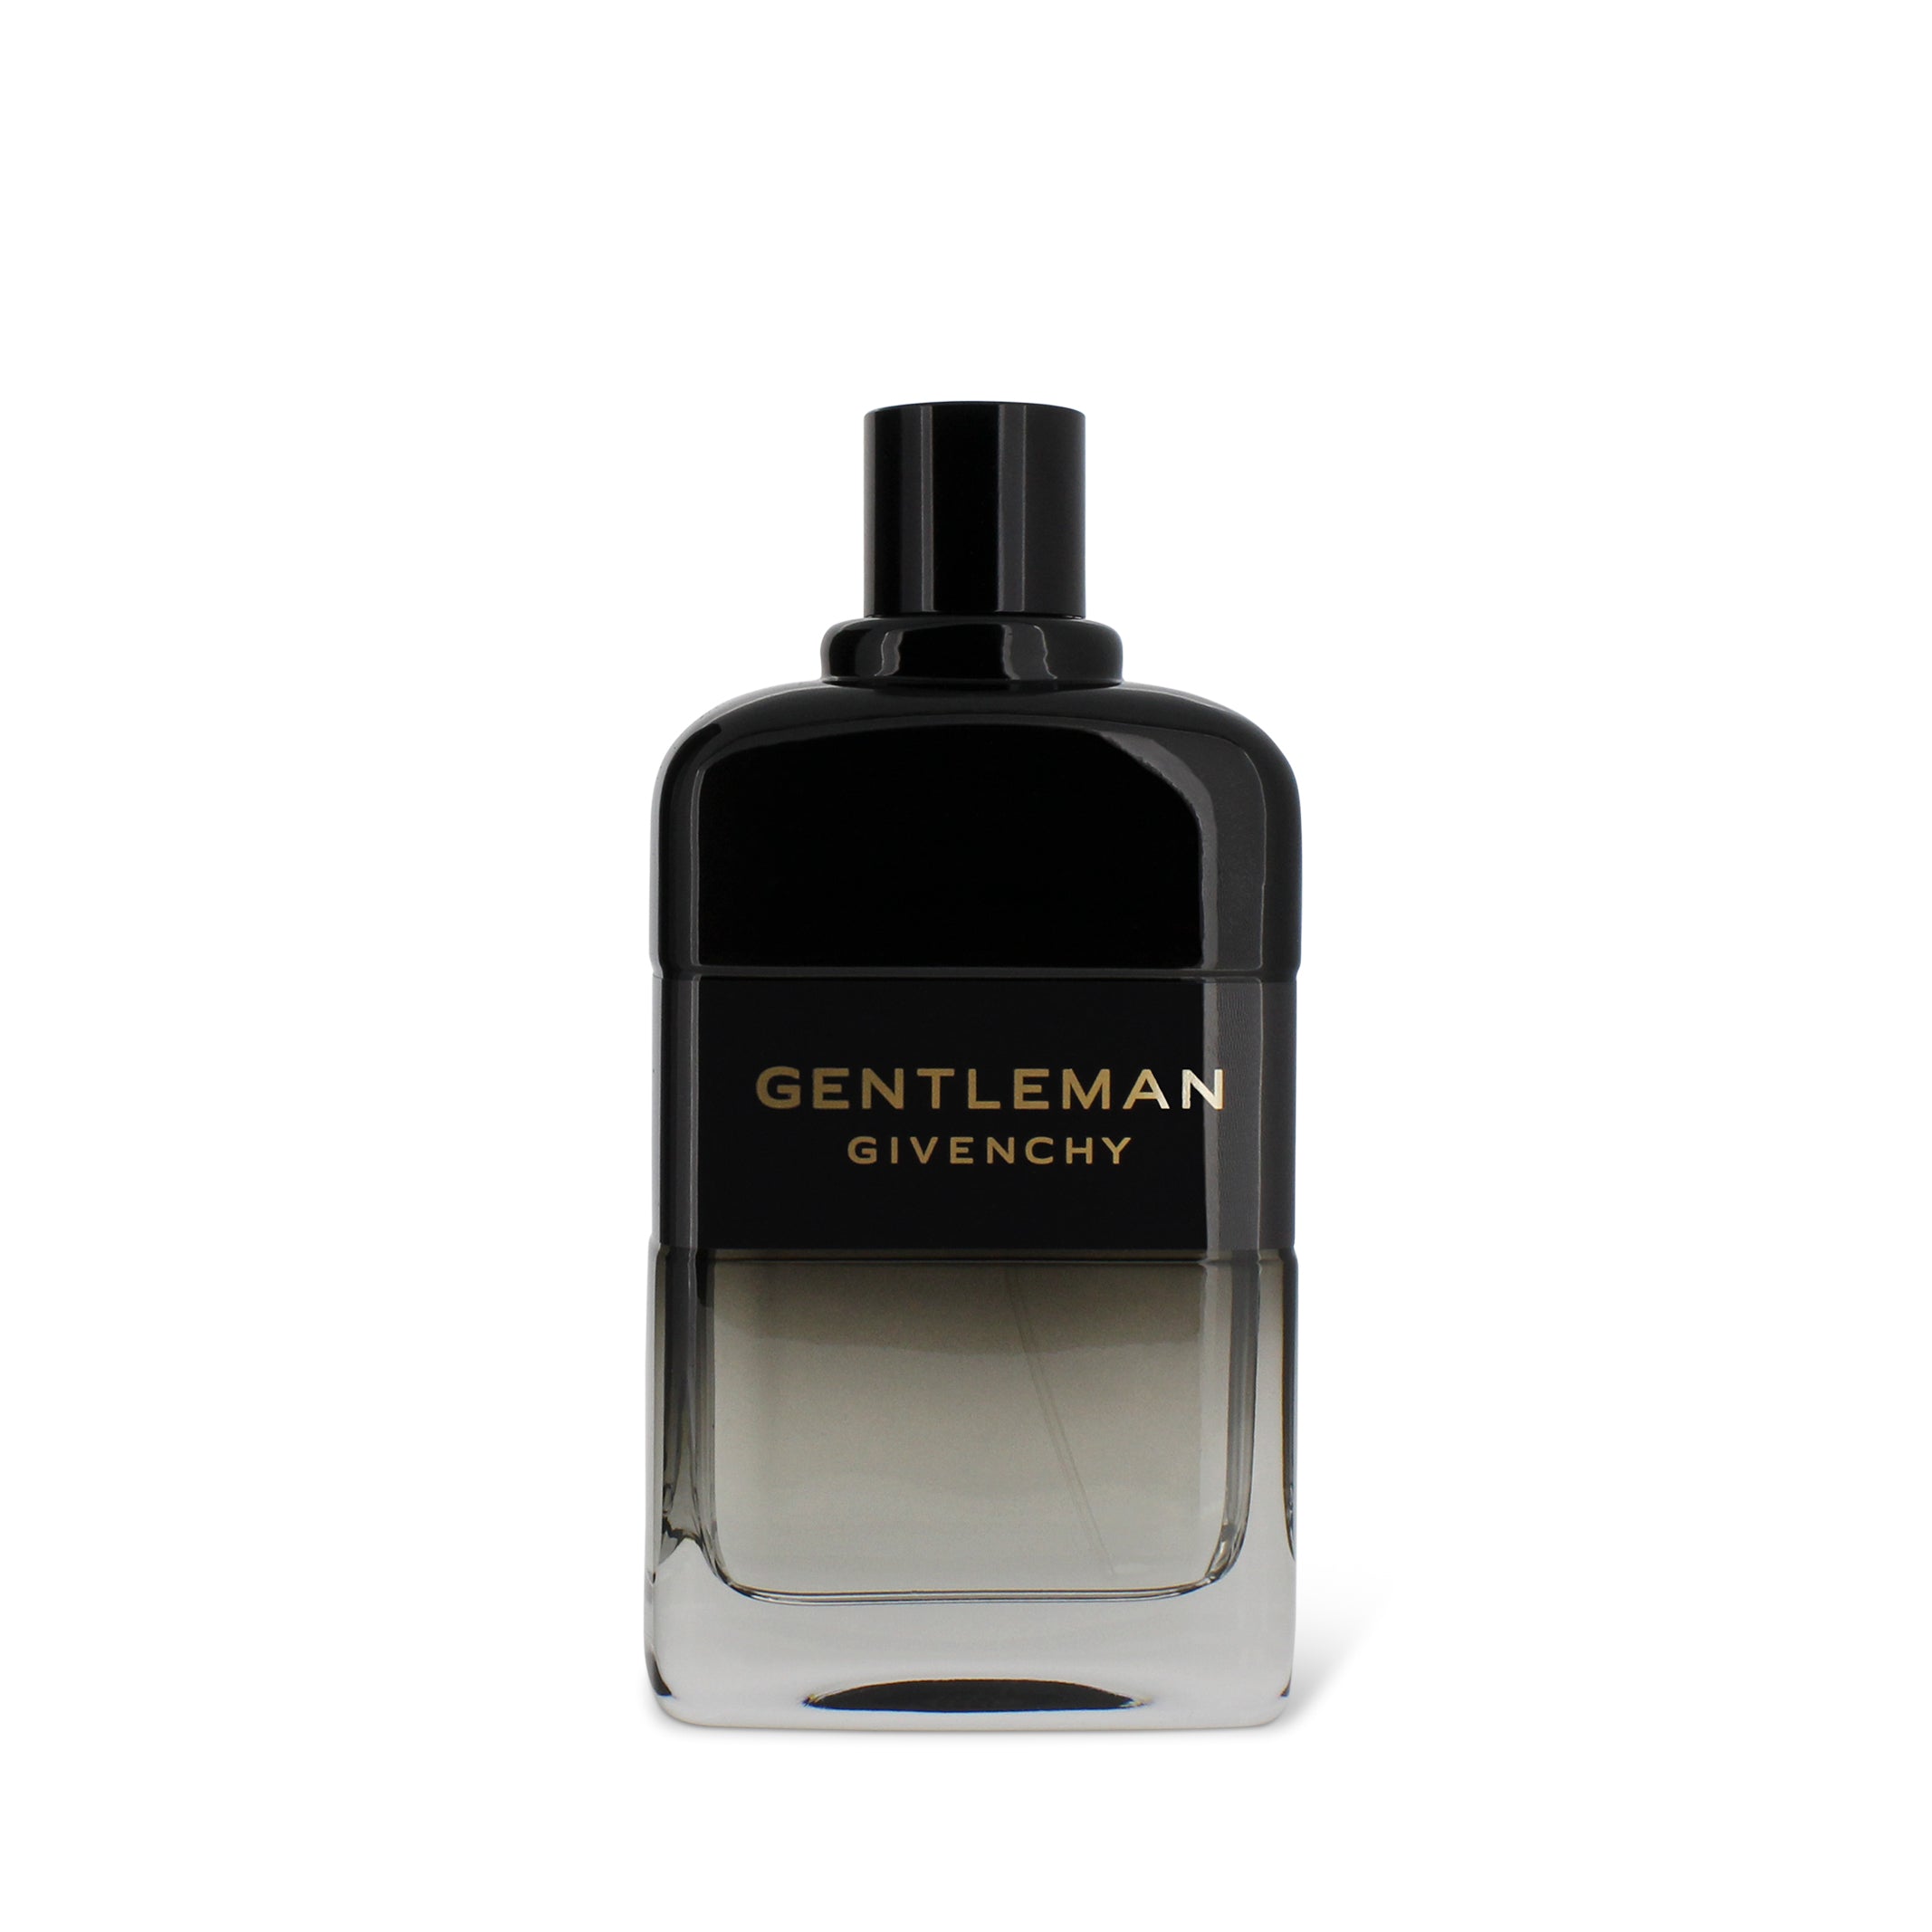 Givenchy Gentleman Eau De Parfum Fragrance Sample Perfume, 55% OFF